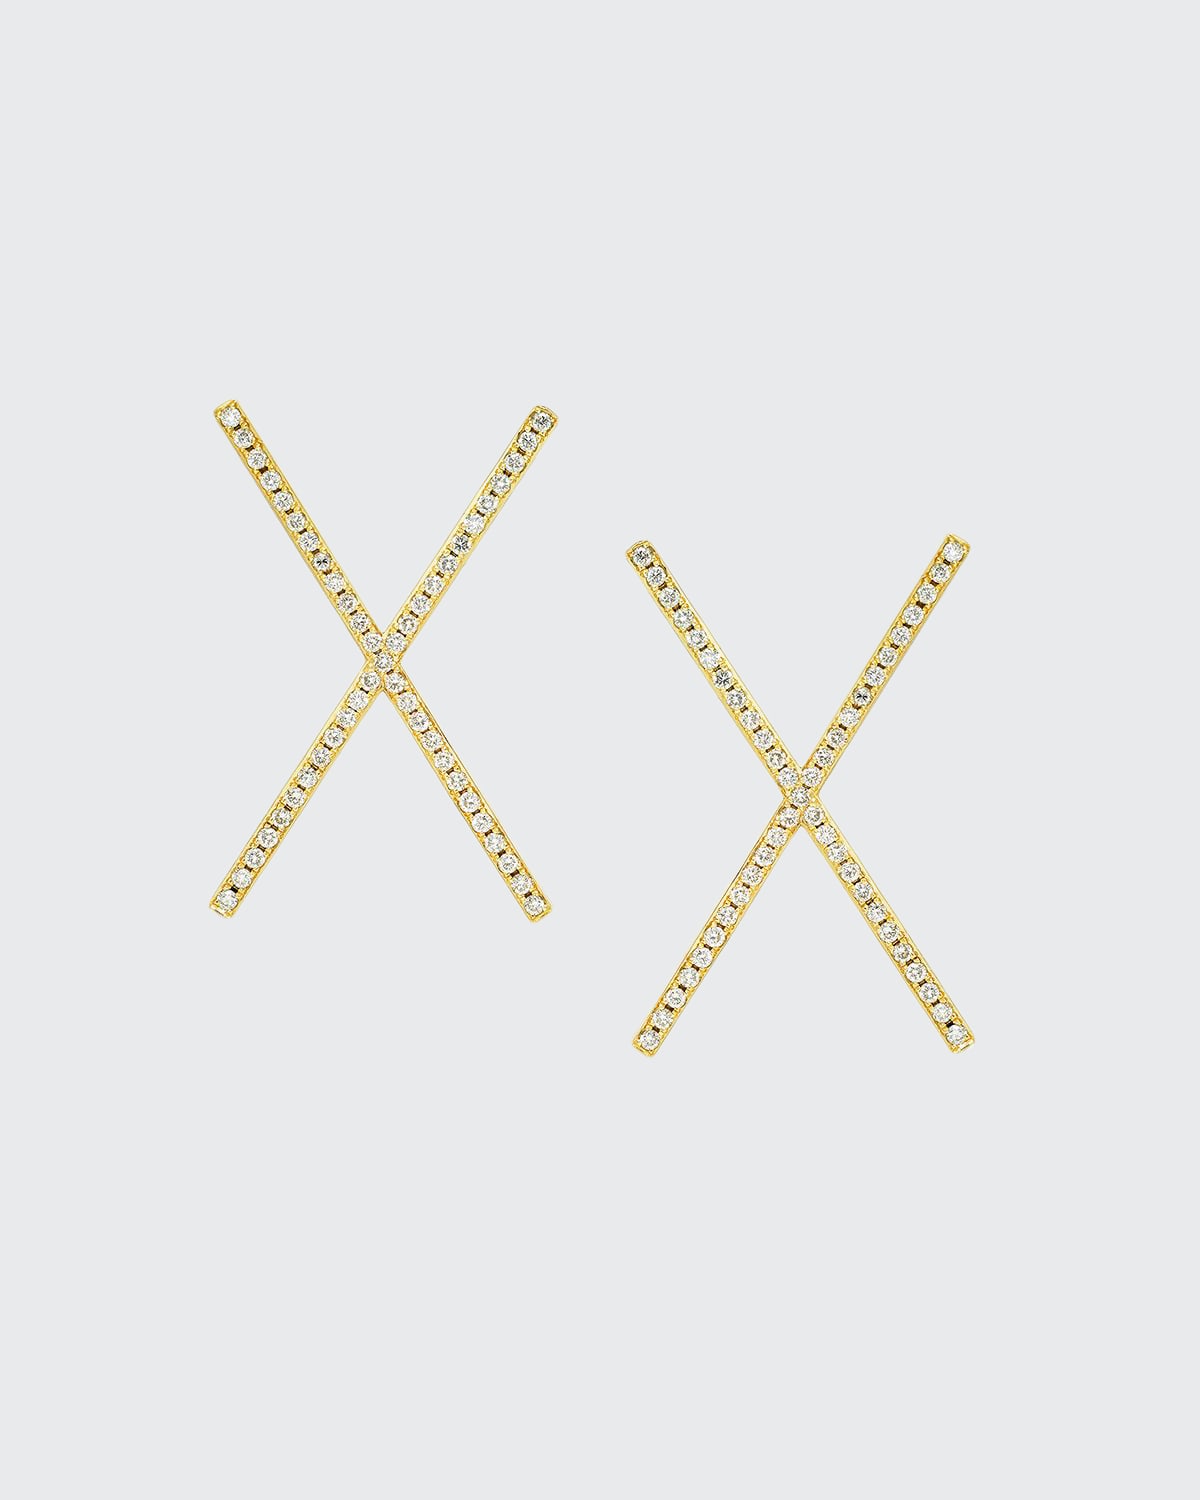 Established Jewelry 18k Yellow Gold Diamond Pave X-stud Earrings